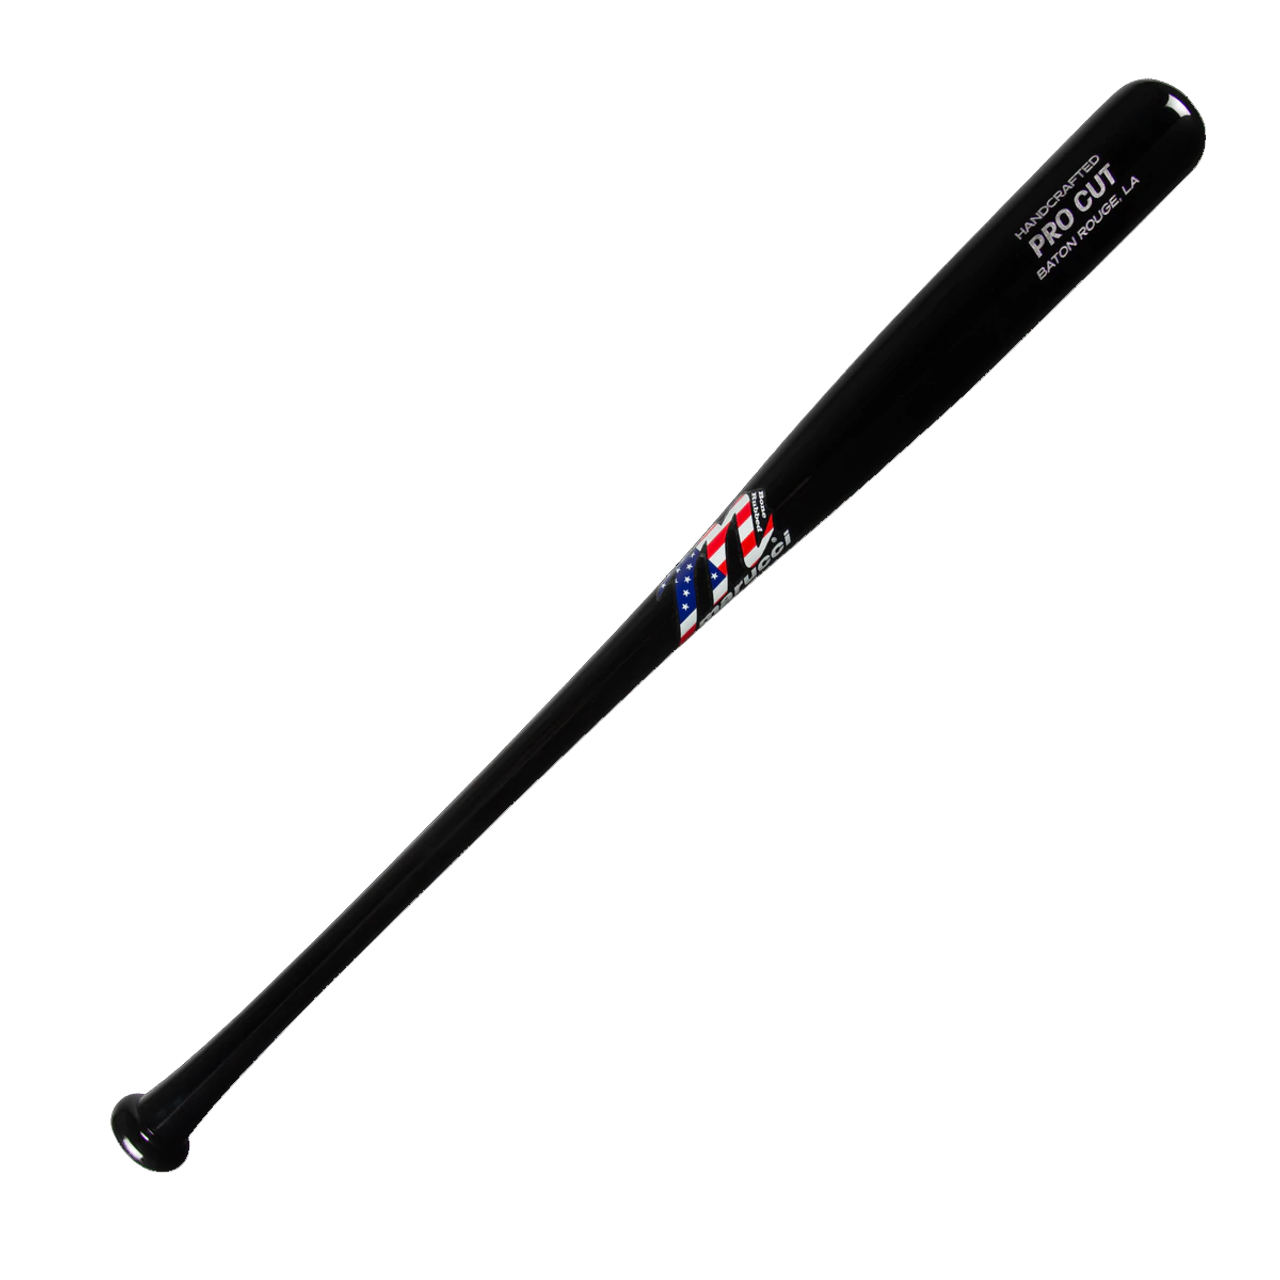 Marucci USA Professional Cut Maple Model Wood Baseball Bat - USA